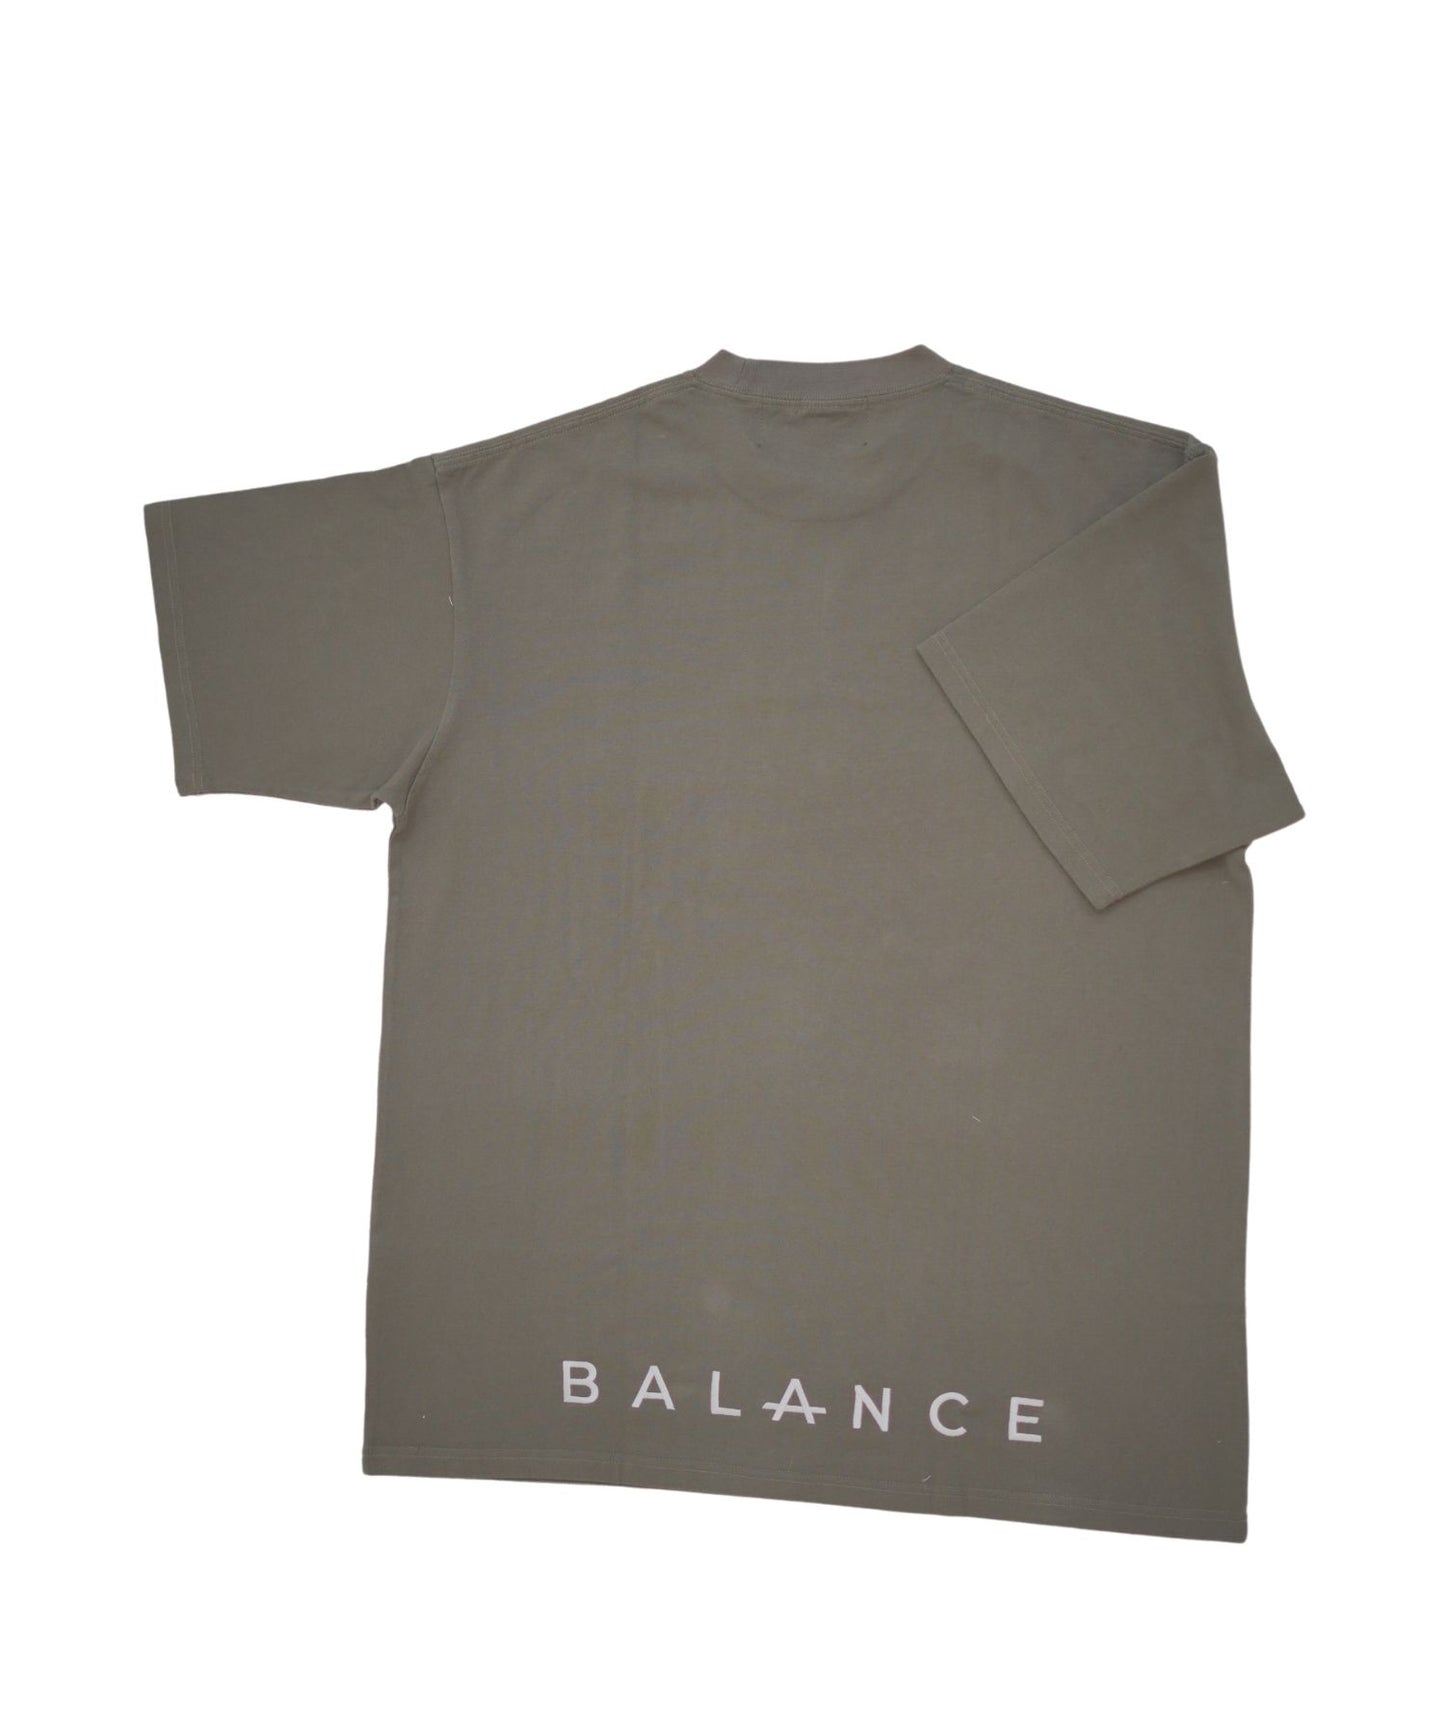 Artchimia balance t shirt